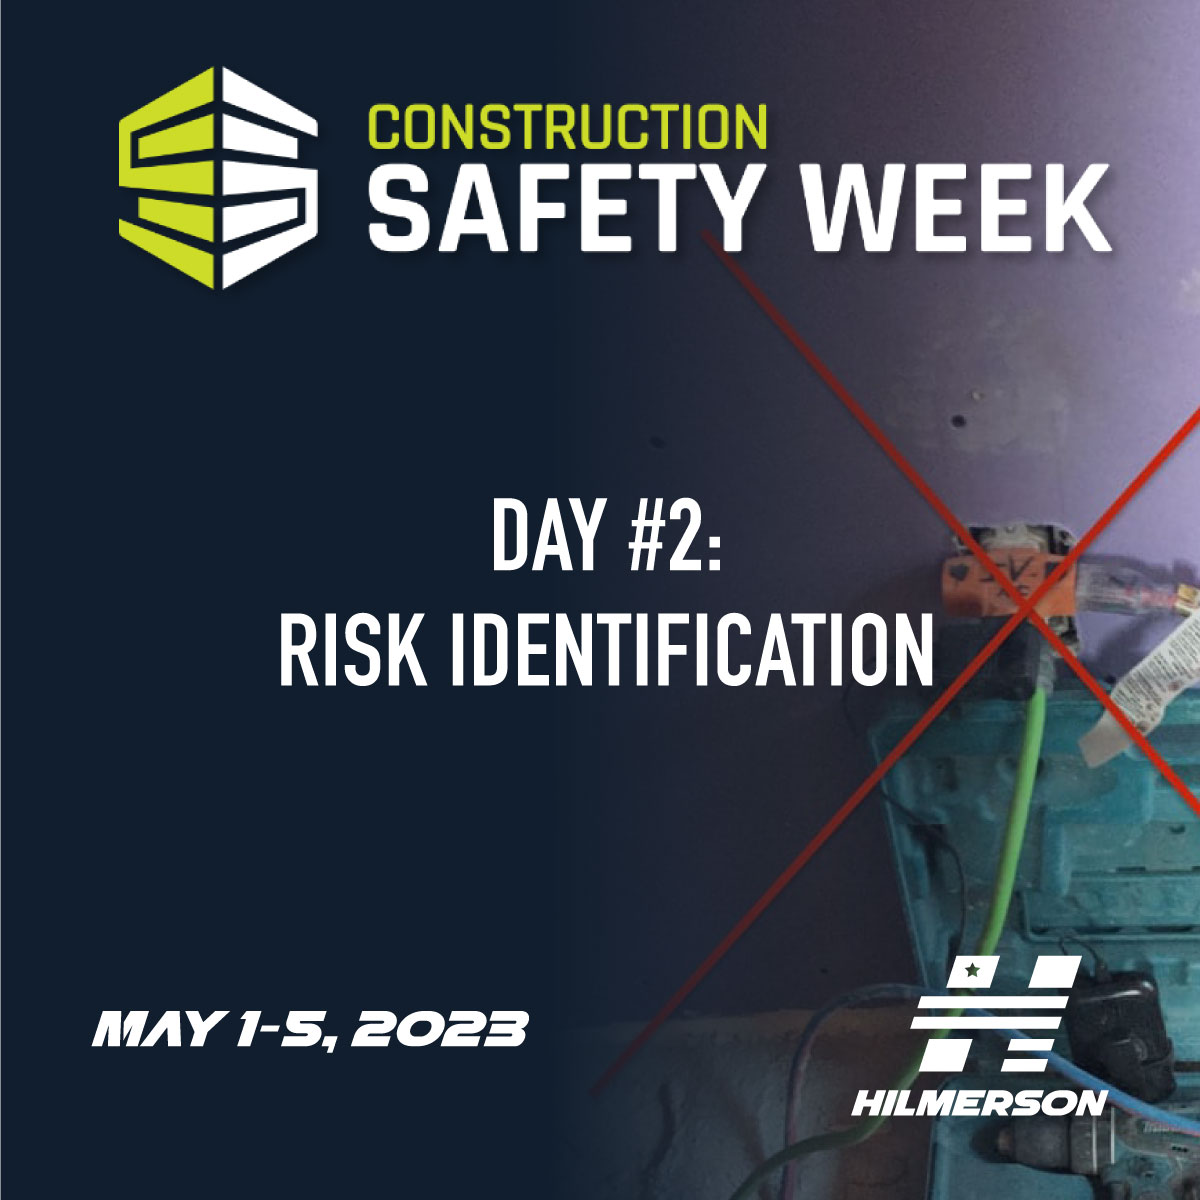 Construction Safety Week Risk Identification